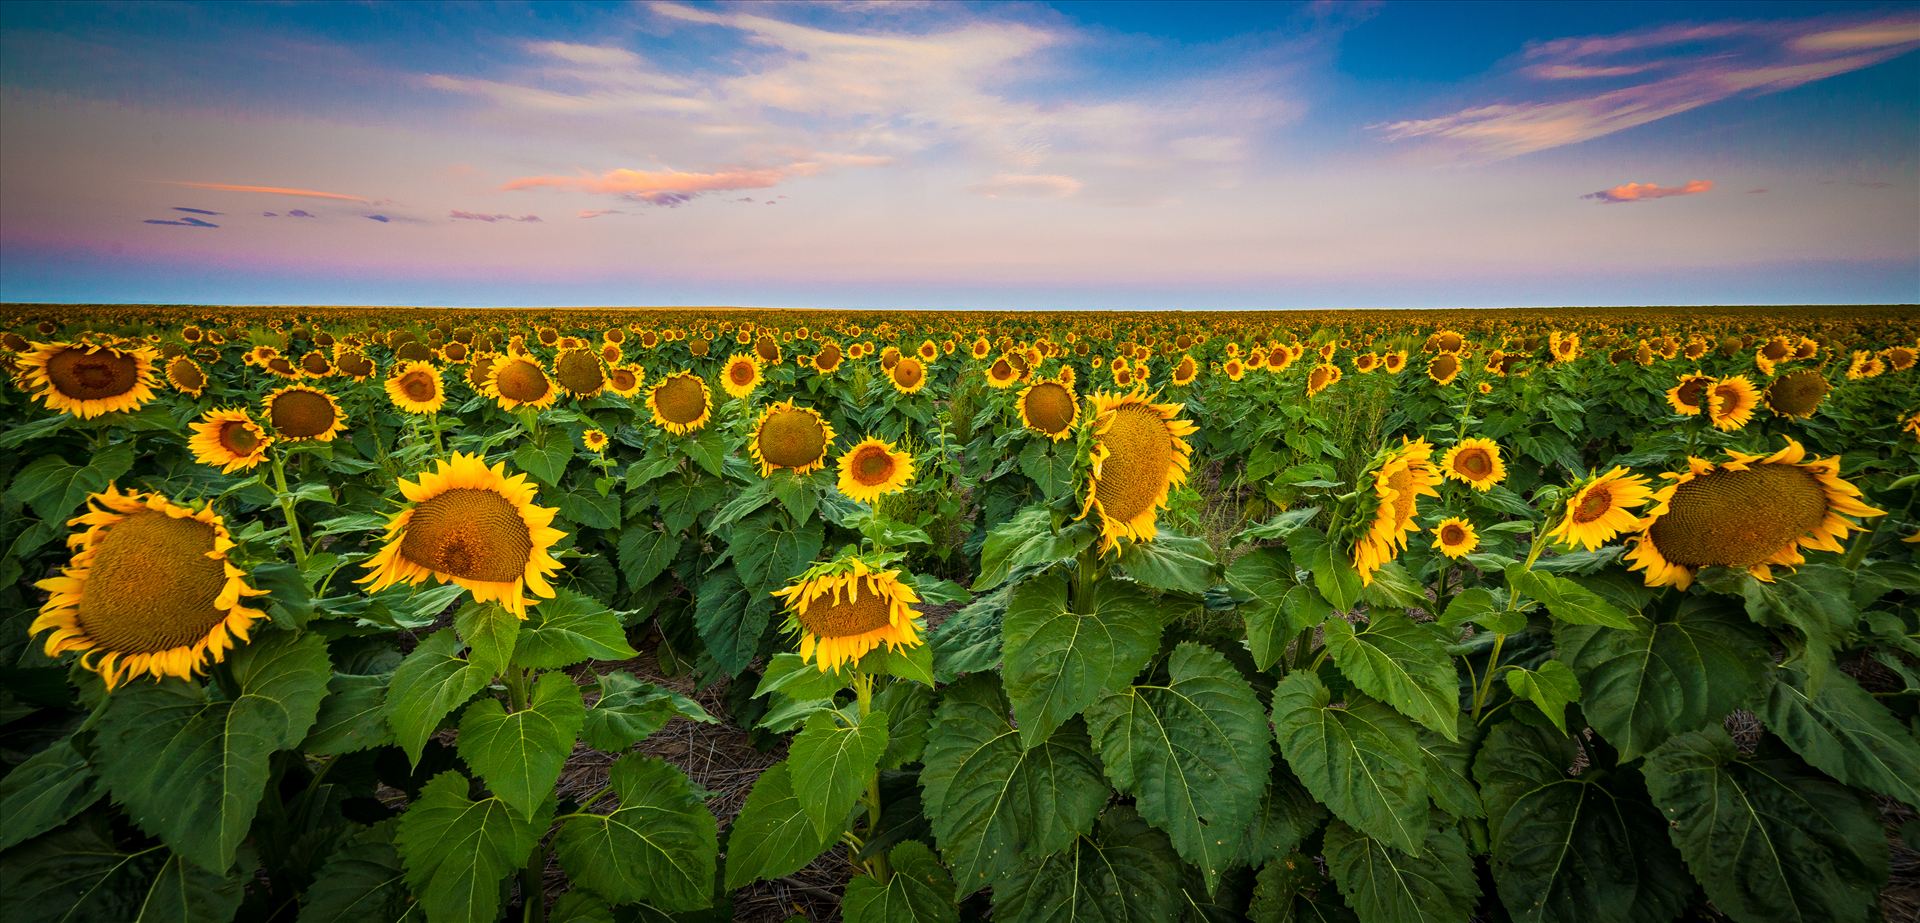 Colorado Sunflower Sunrise - Sunflowers near Denver International Airport. by Scott Smith Photos